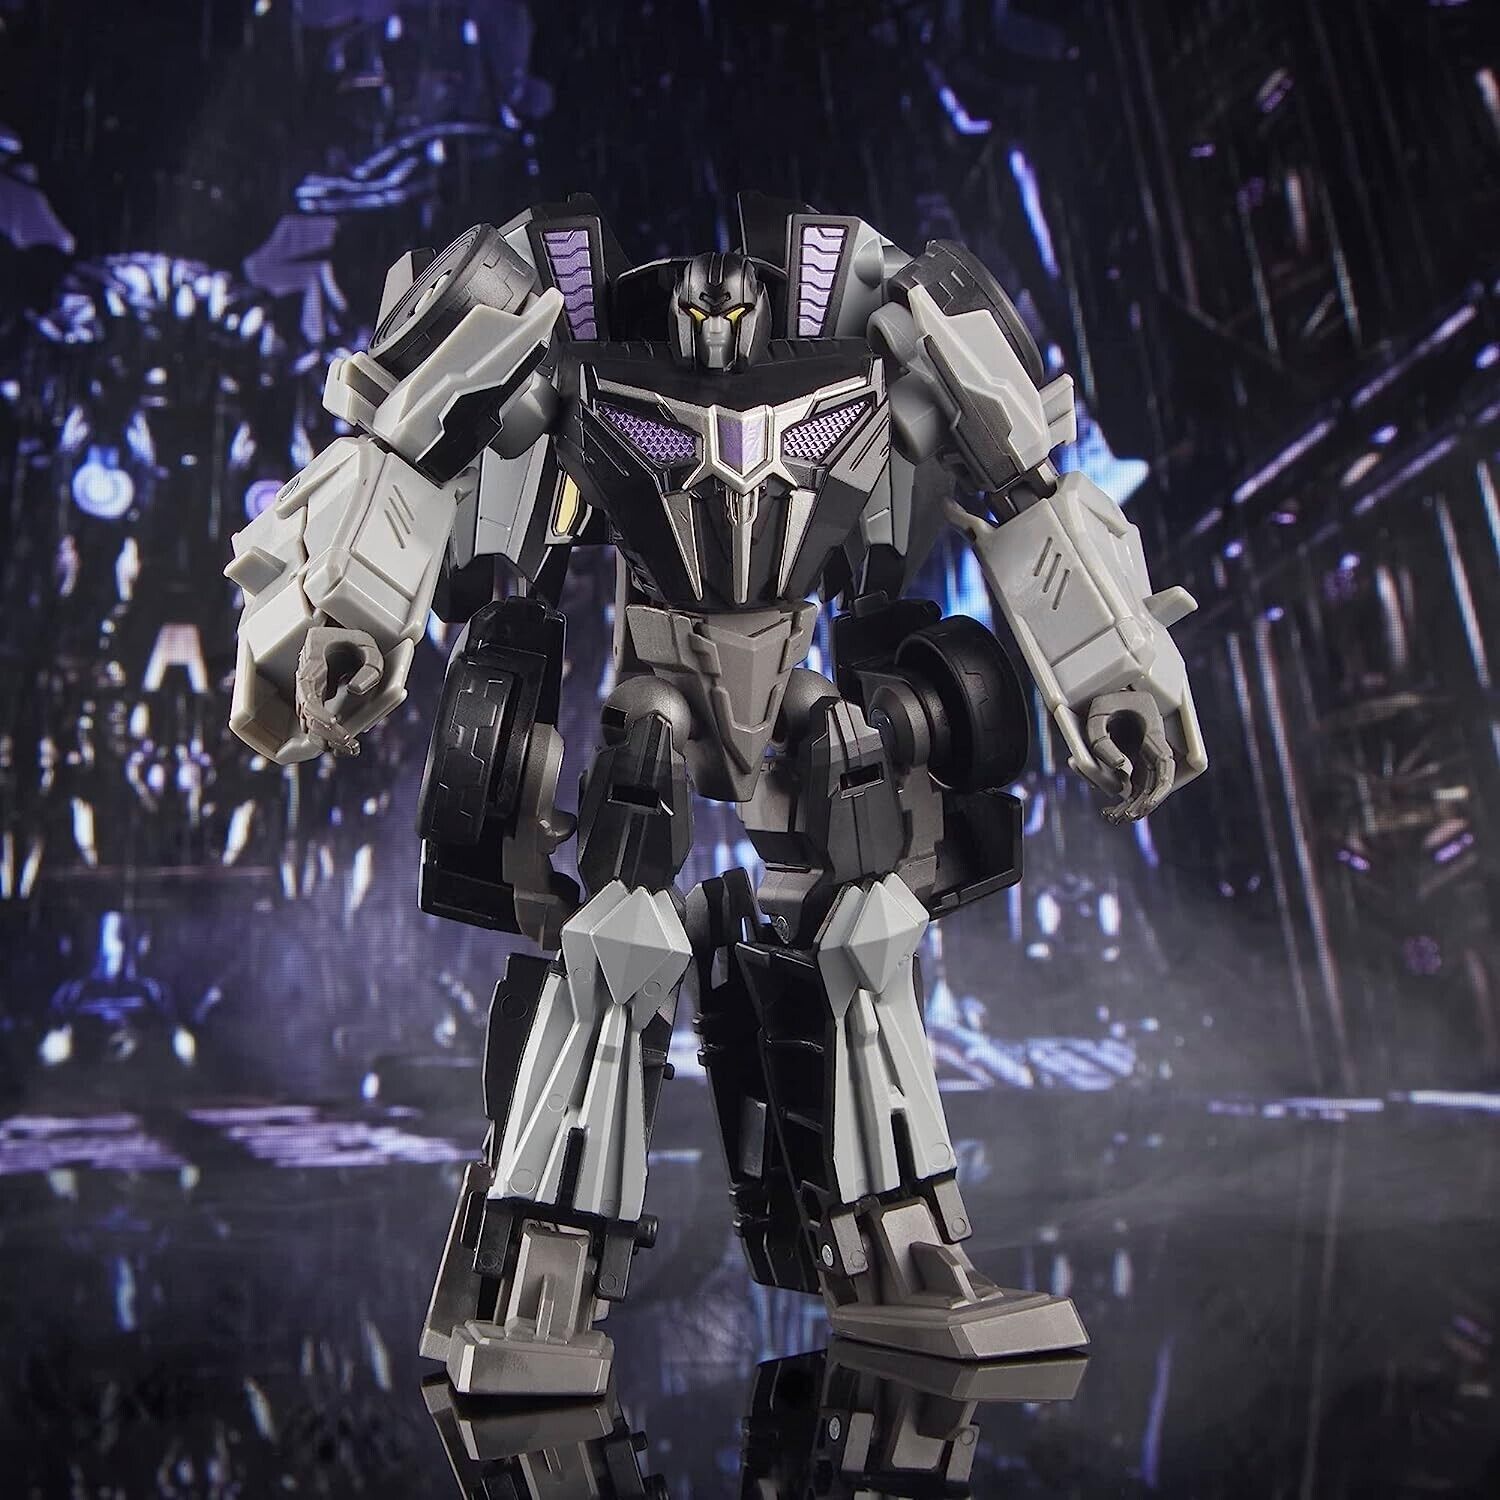 Barricade SS+02 - Transformers Studio Series WFC - Deluxe Class - Hasbro Toys